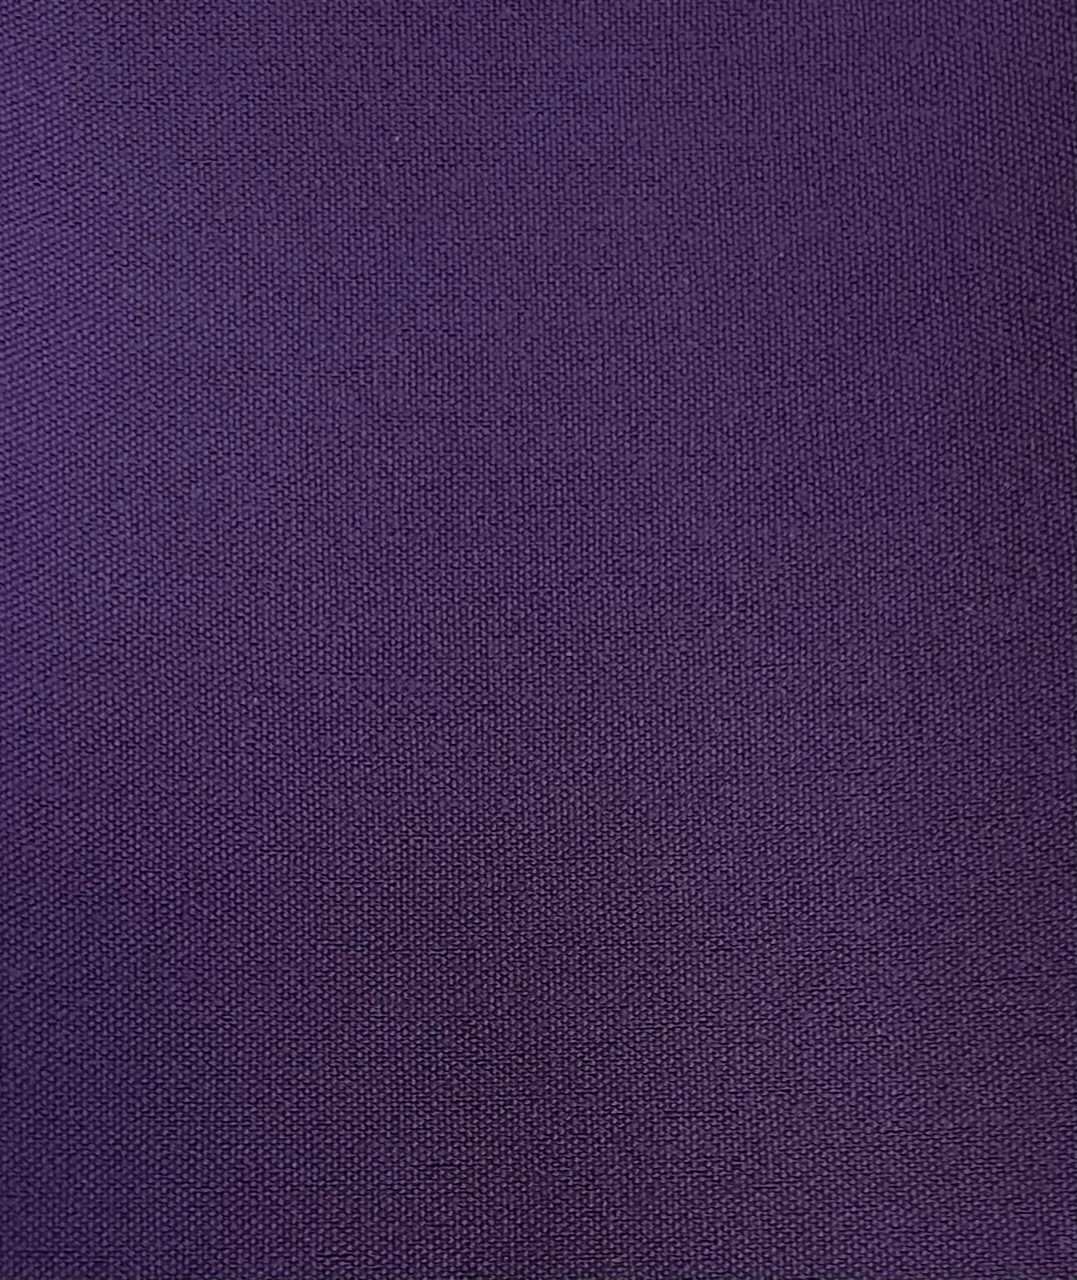 Napkin, Purple | Raymond Brothers Limited